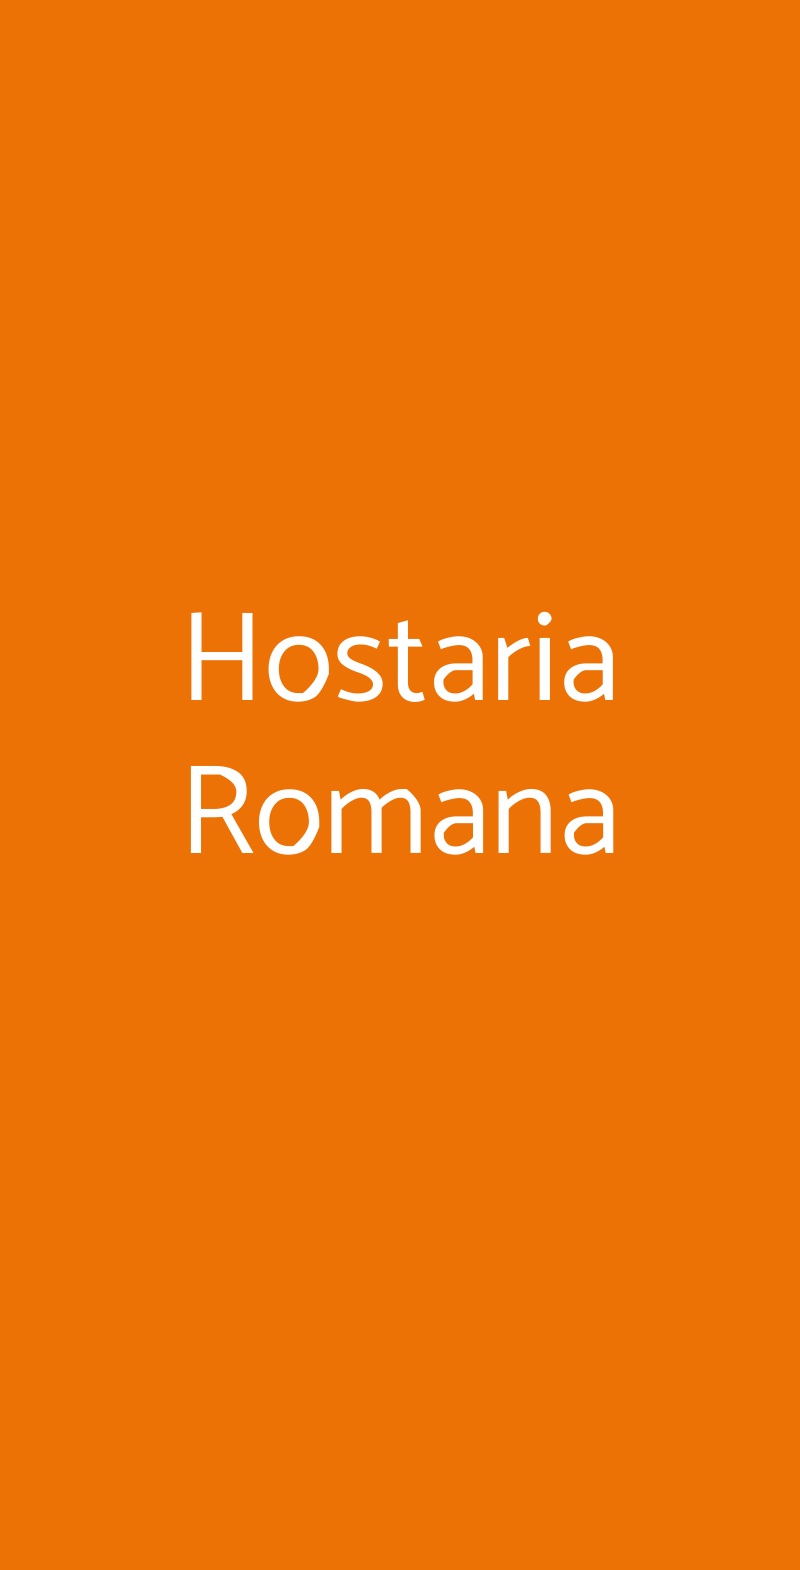 Hostaria Romana Monza menù 1 pagina